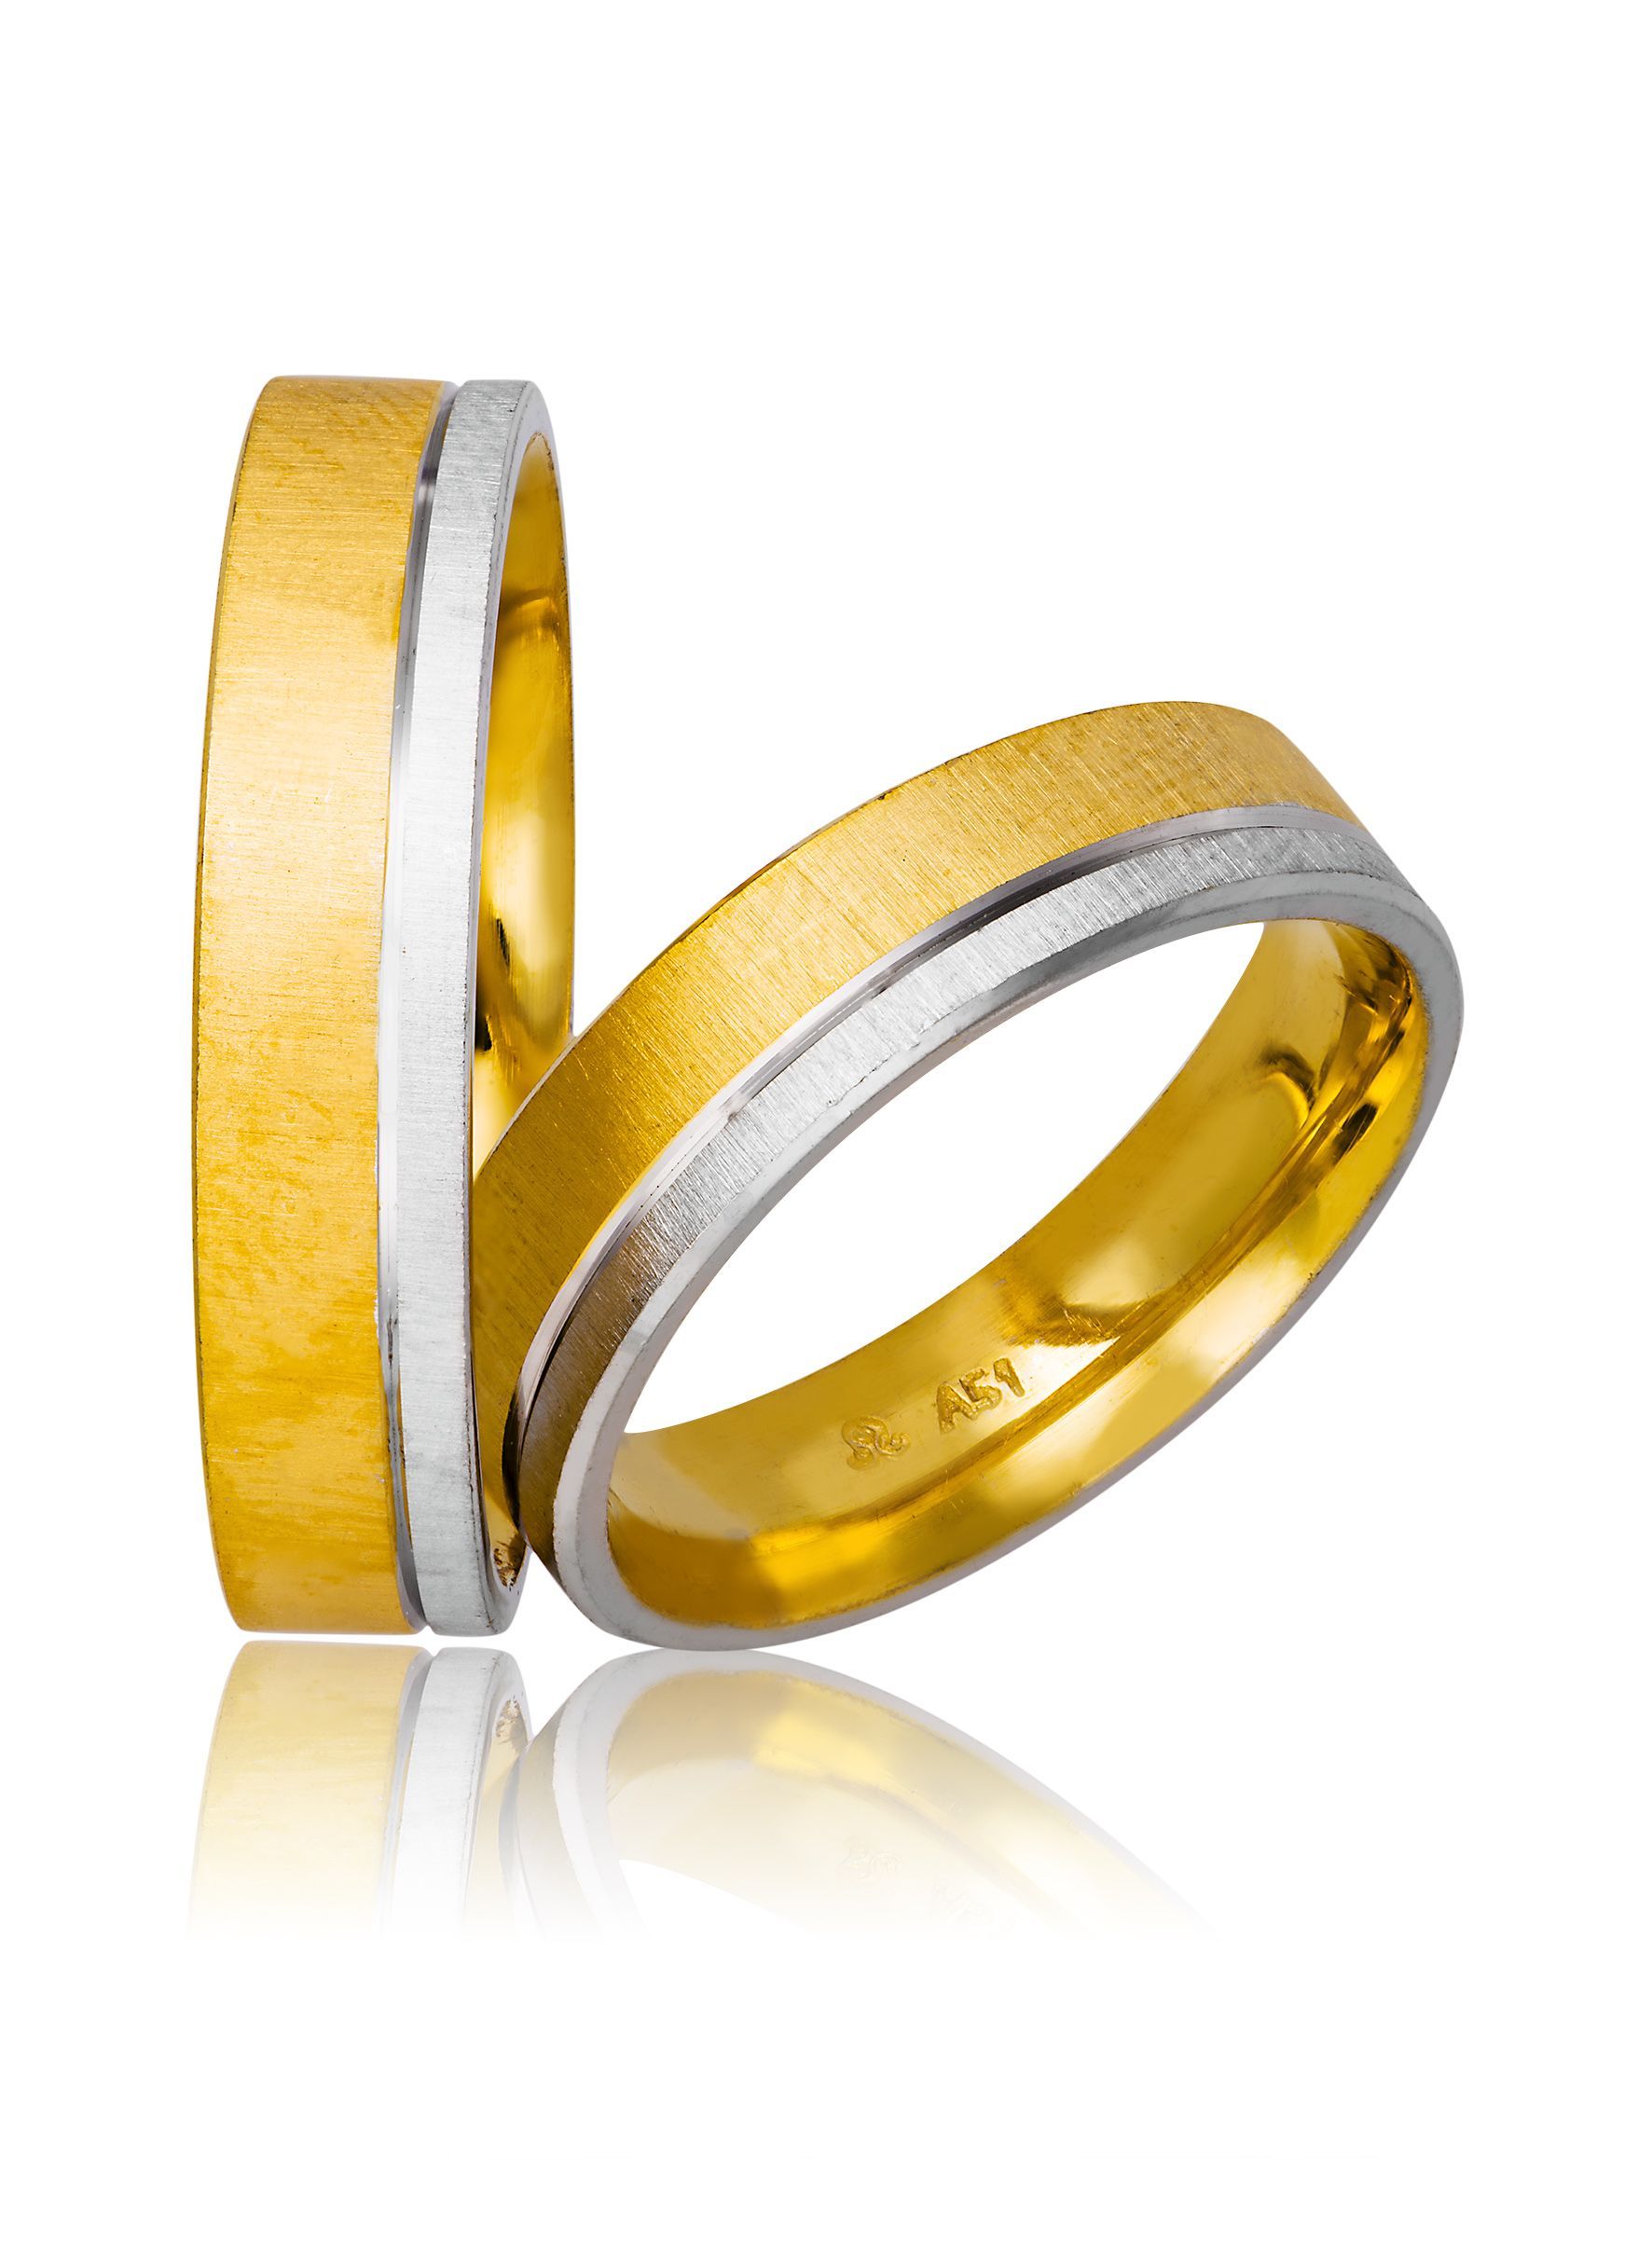 White gold & gold wedding rings 5mm (code 710)